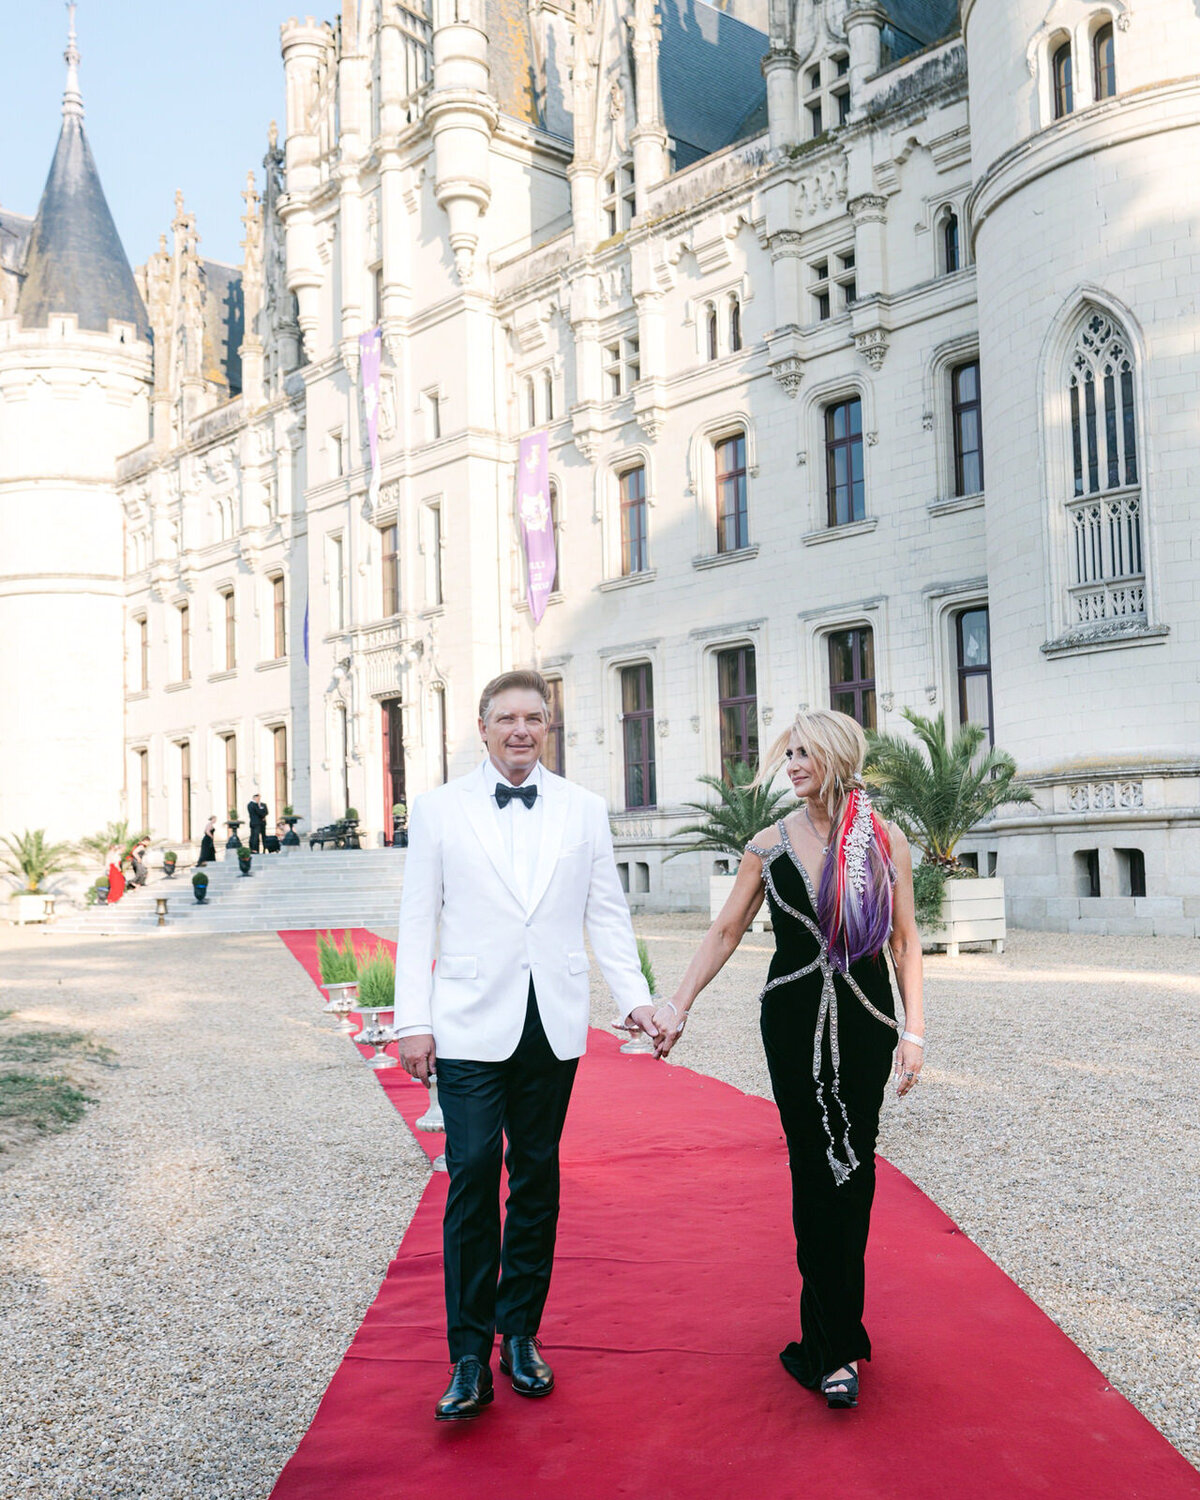 Chateau de Challain wedding - French chateau wedding - Serenity Photography - 293